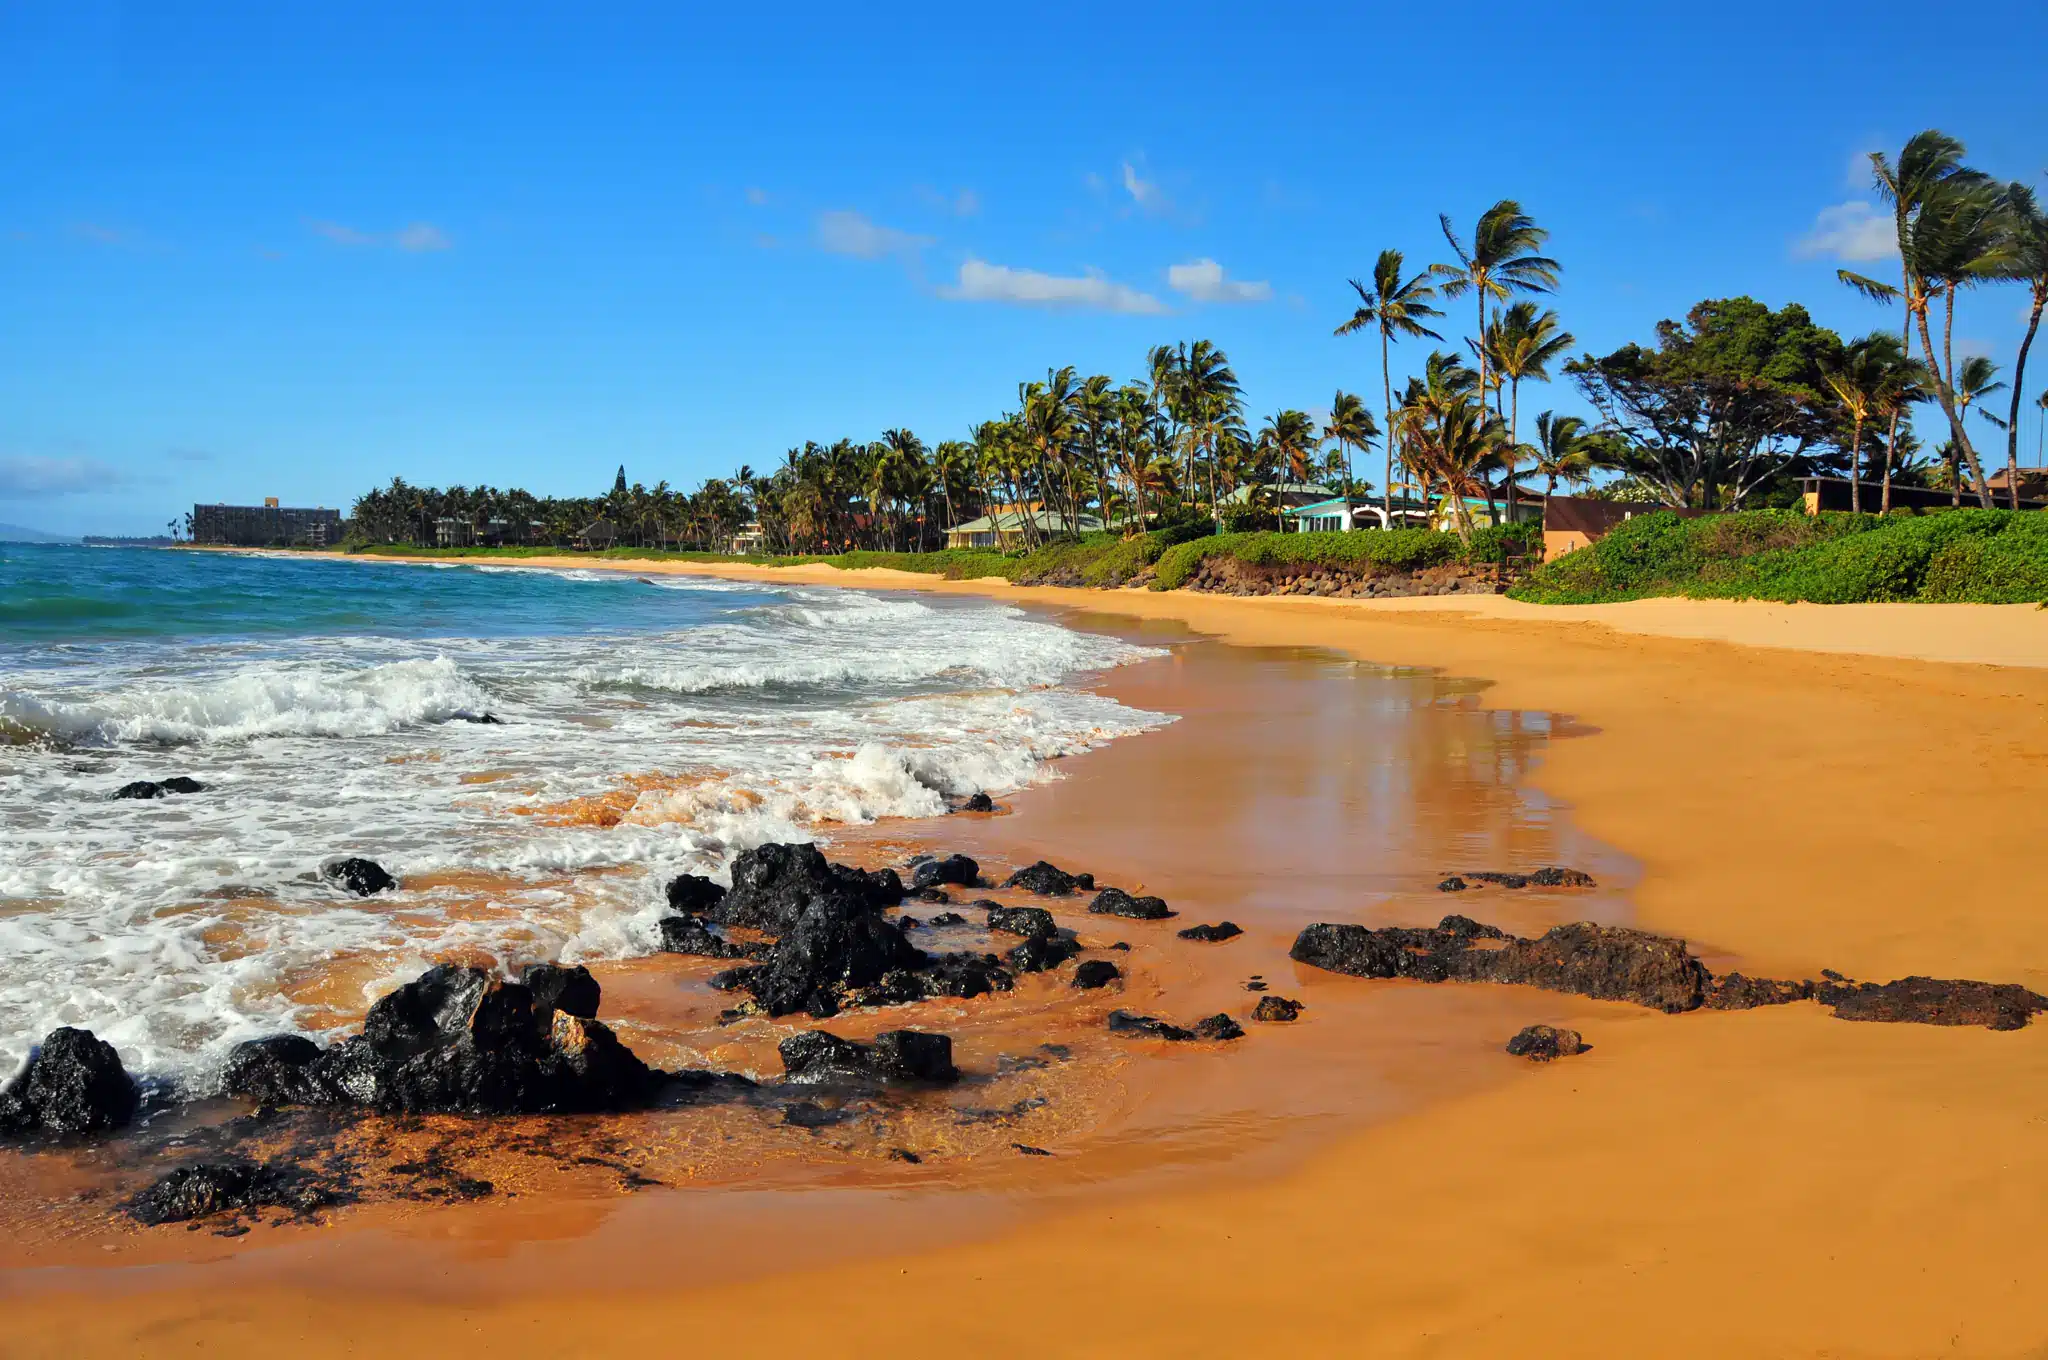 Mokapu Beach is a Beach located in the city of Wailea on Maui, Hawaii